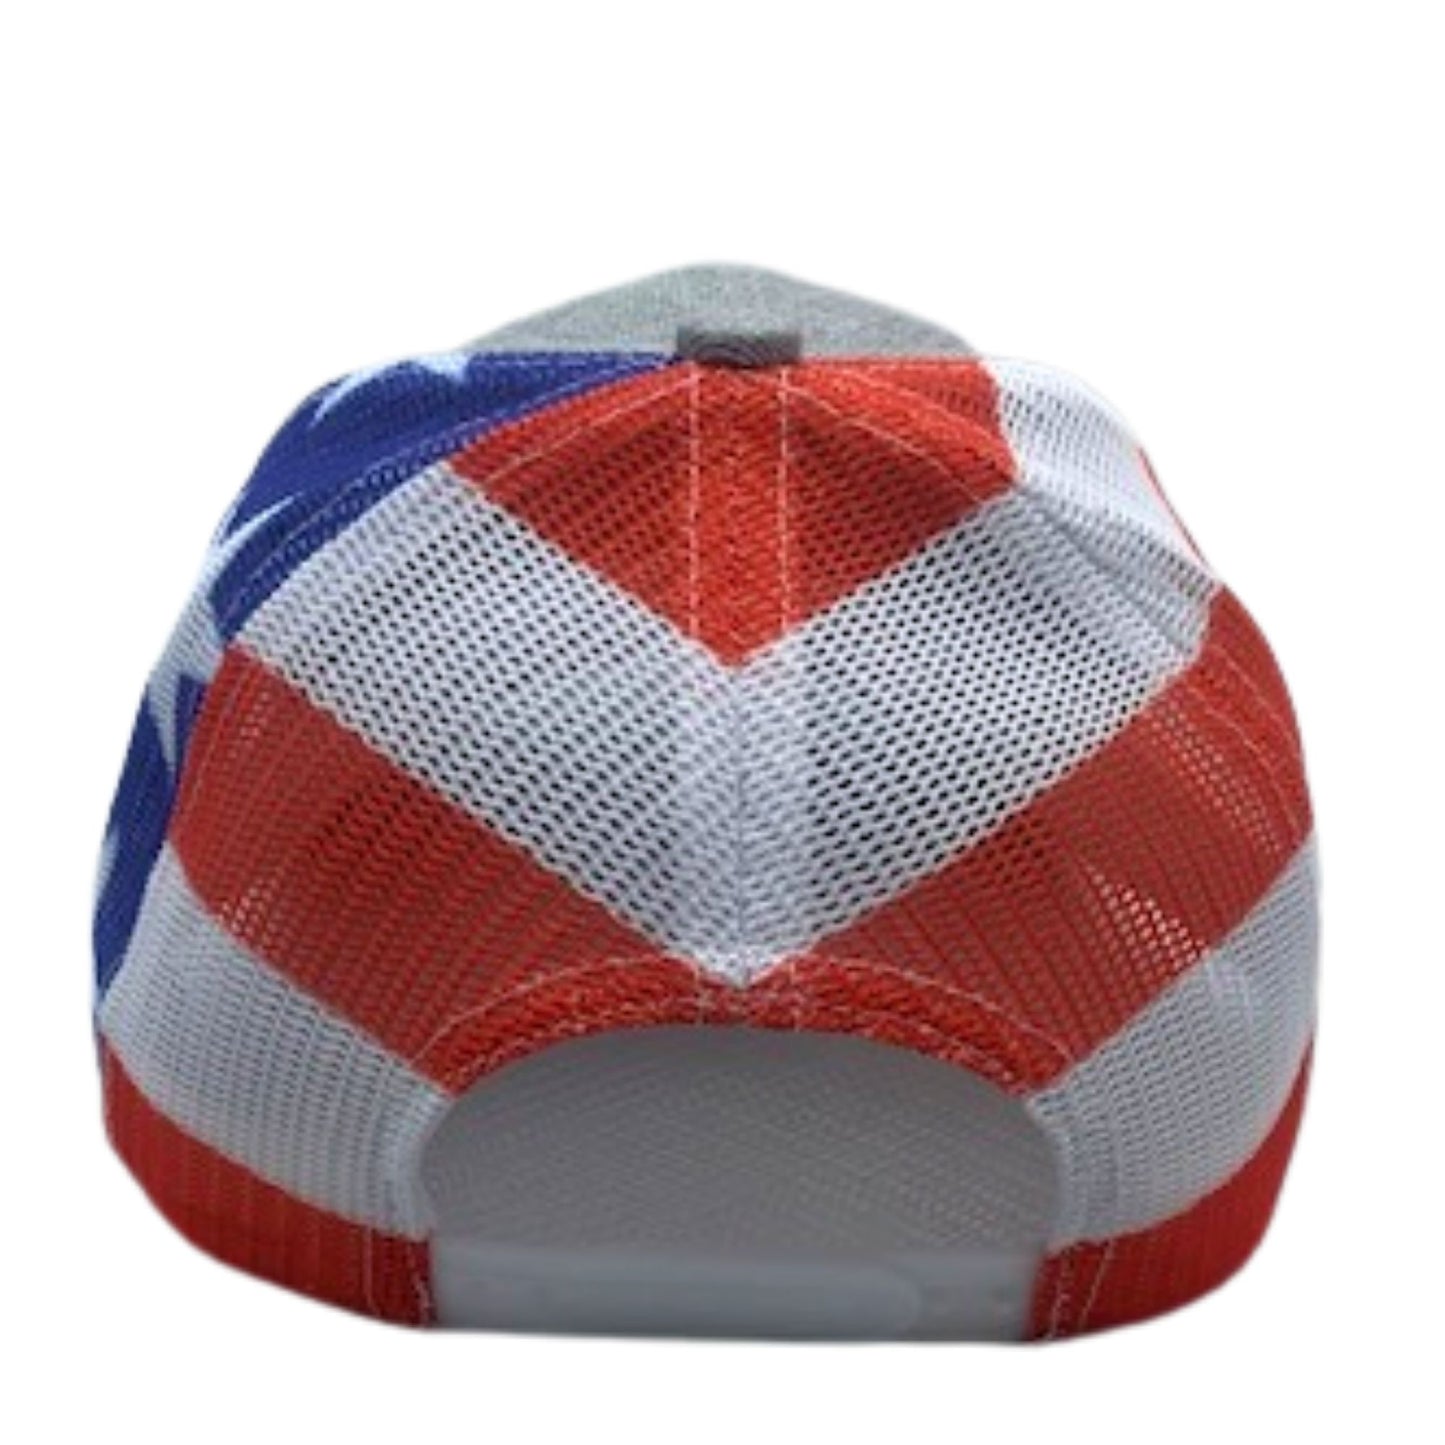 Donald Trump Ron Desantis 2024 Save America Trucker Hat with Flag Pattern Mesh Back | Unisex Patriotic Trump DeSantis '24 Cap with USA Flag